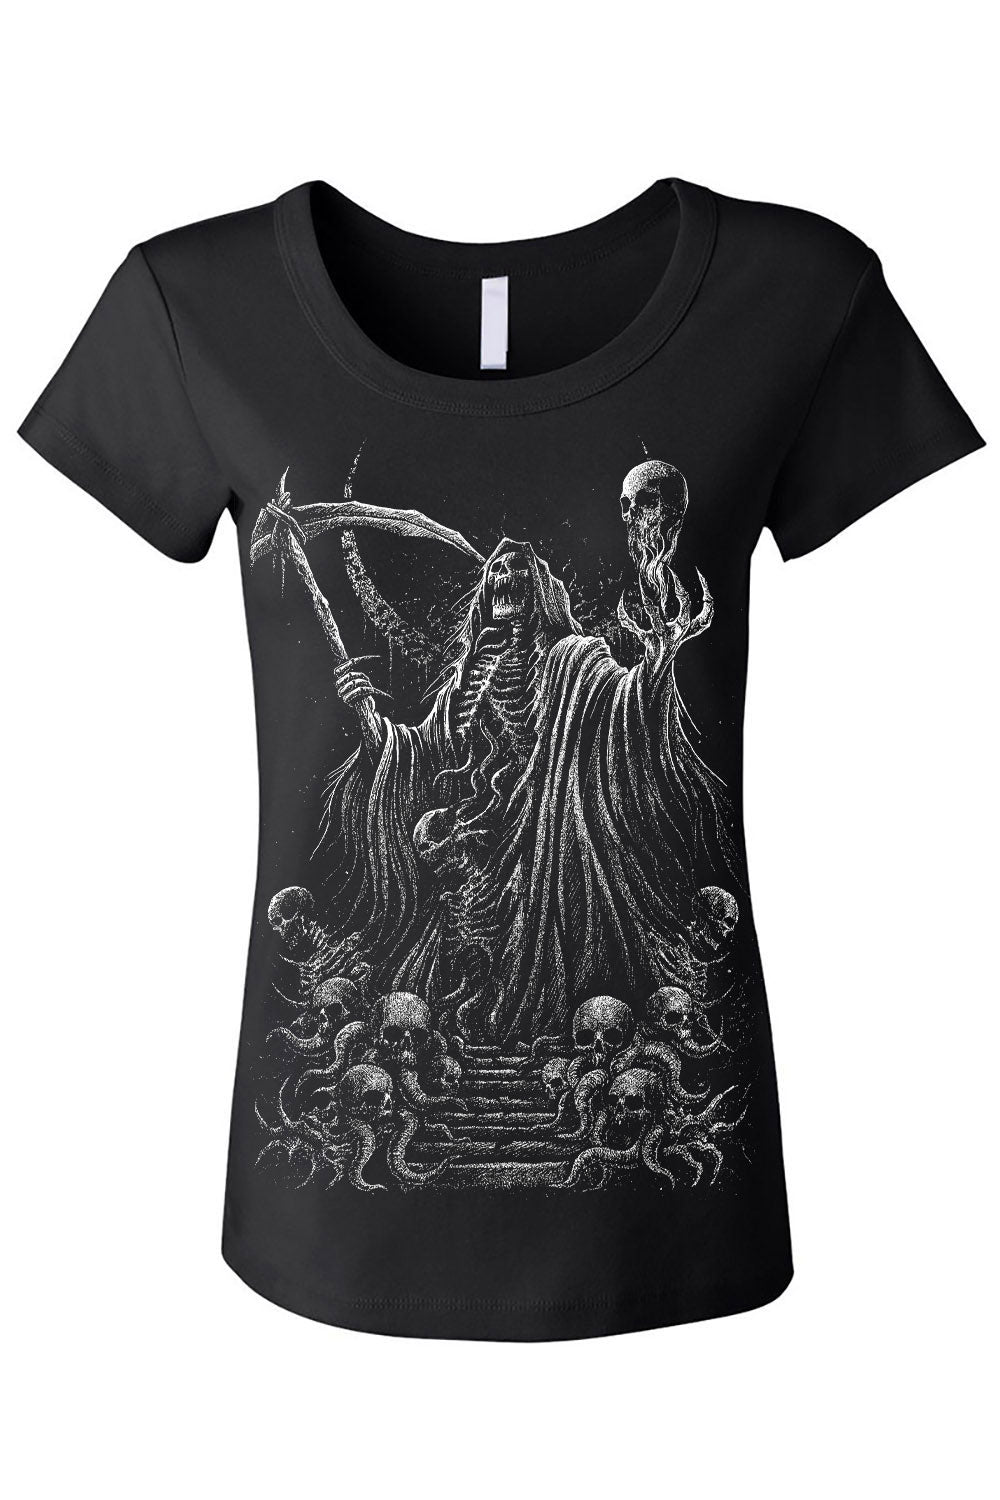 short sleeve gothic shirt for women